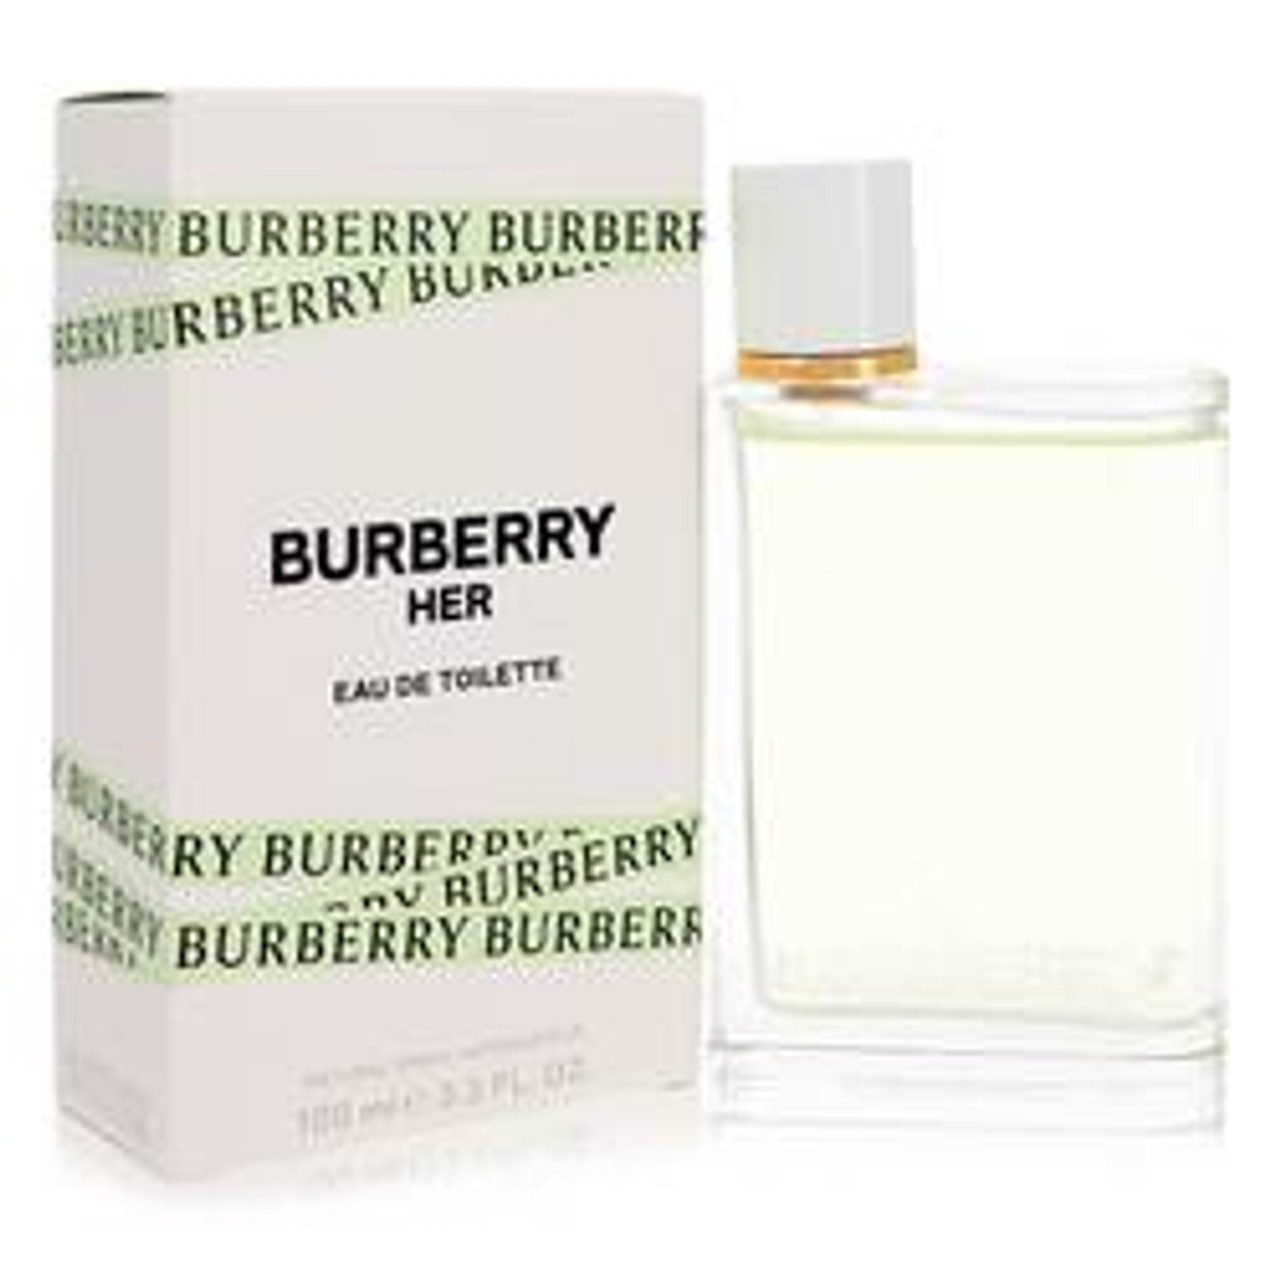 Burberry Her Perfume By Burberry Eau De Toilette Spray 3.4 oz for Women - *Pre-Order